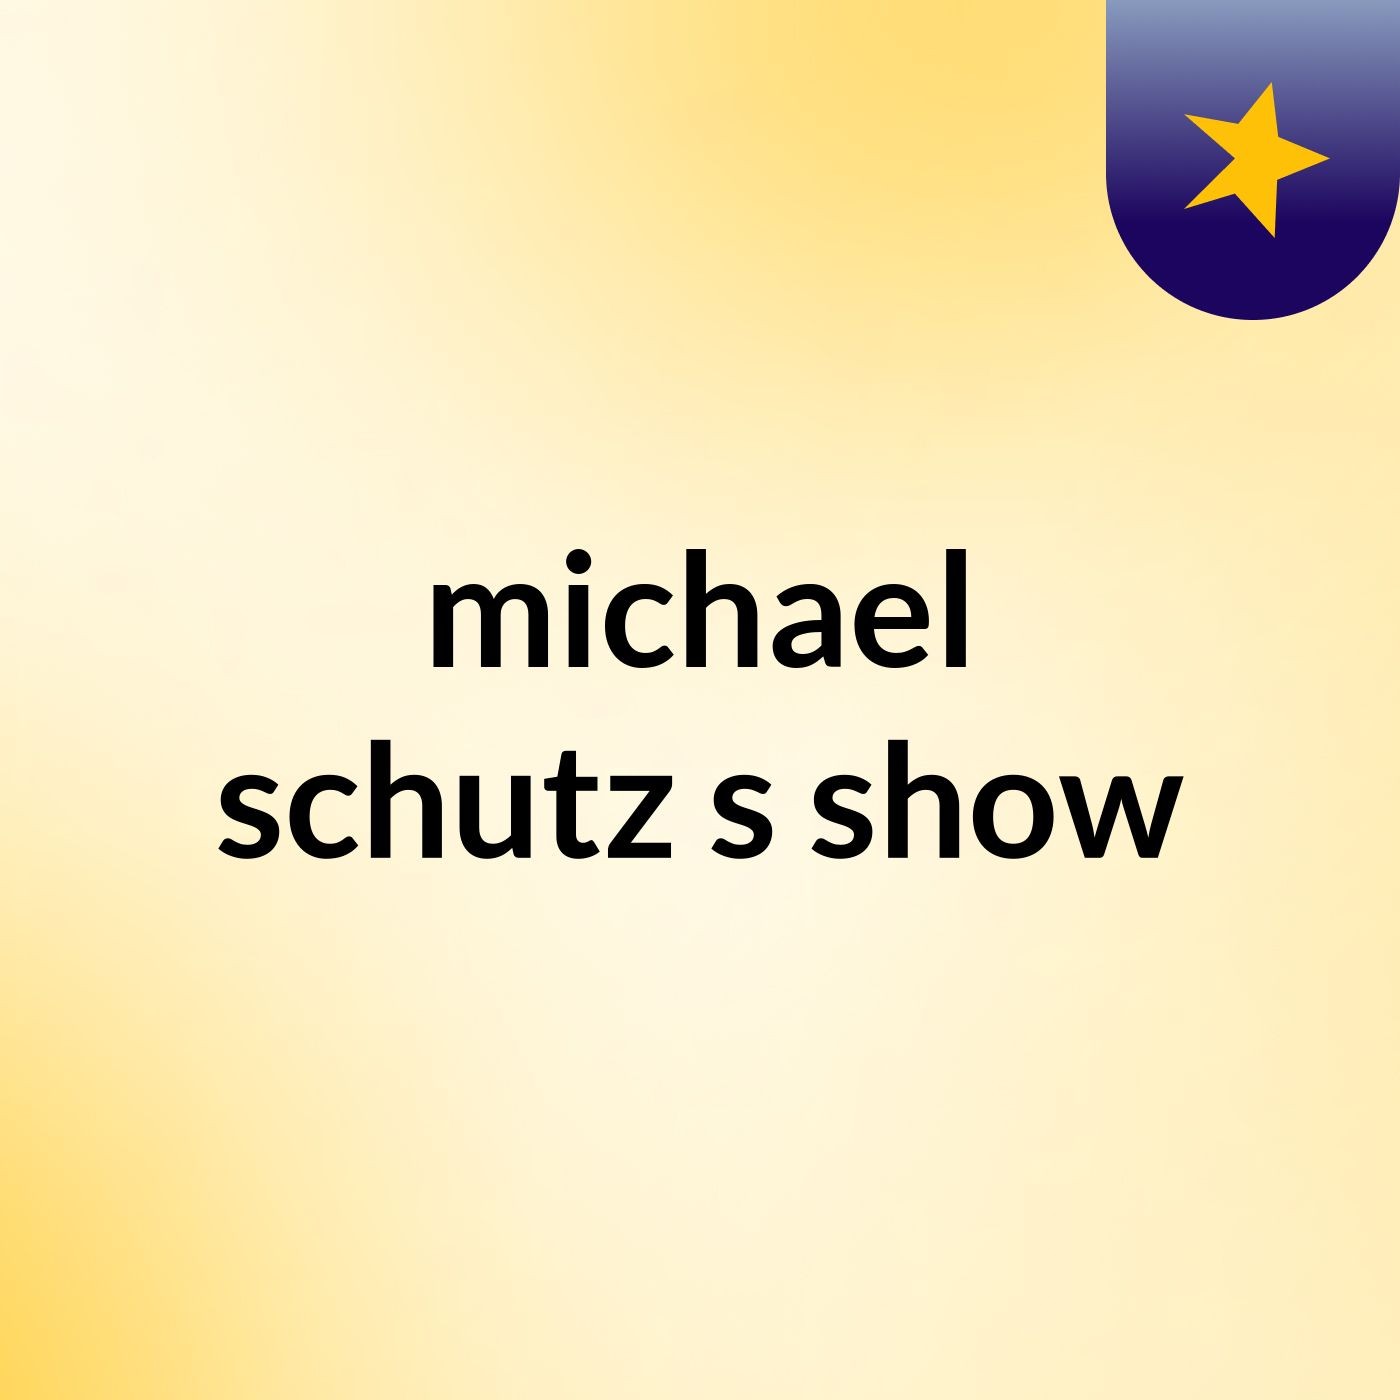 Episode 4 - michael schutz's show